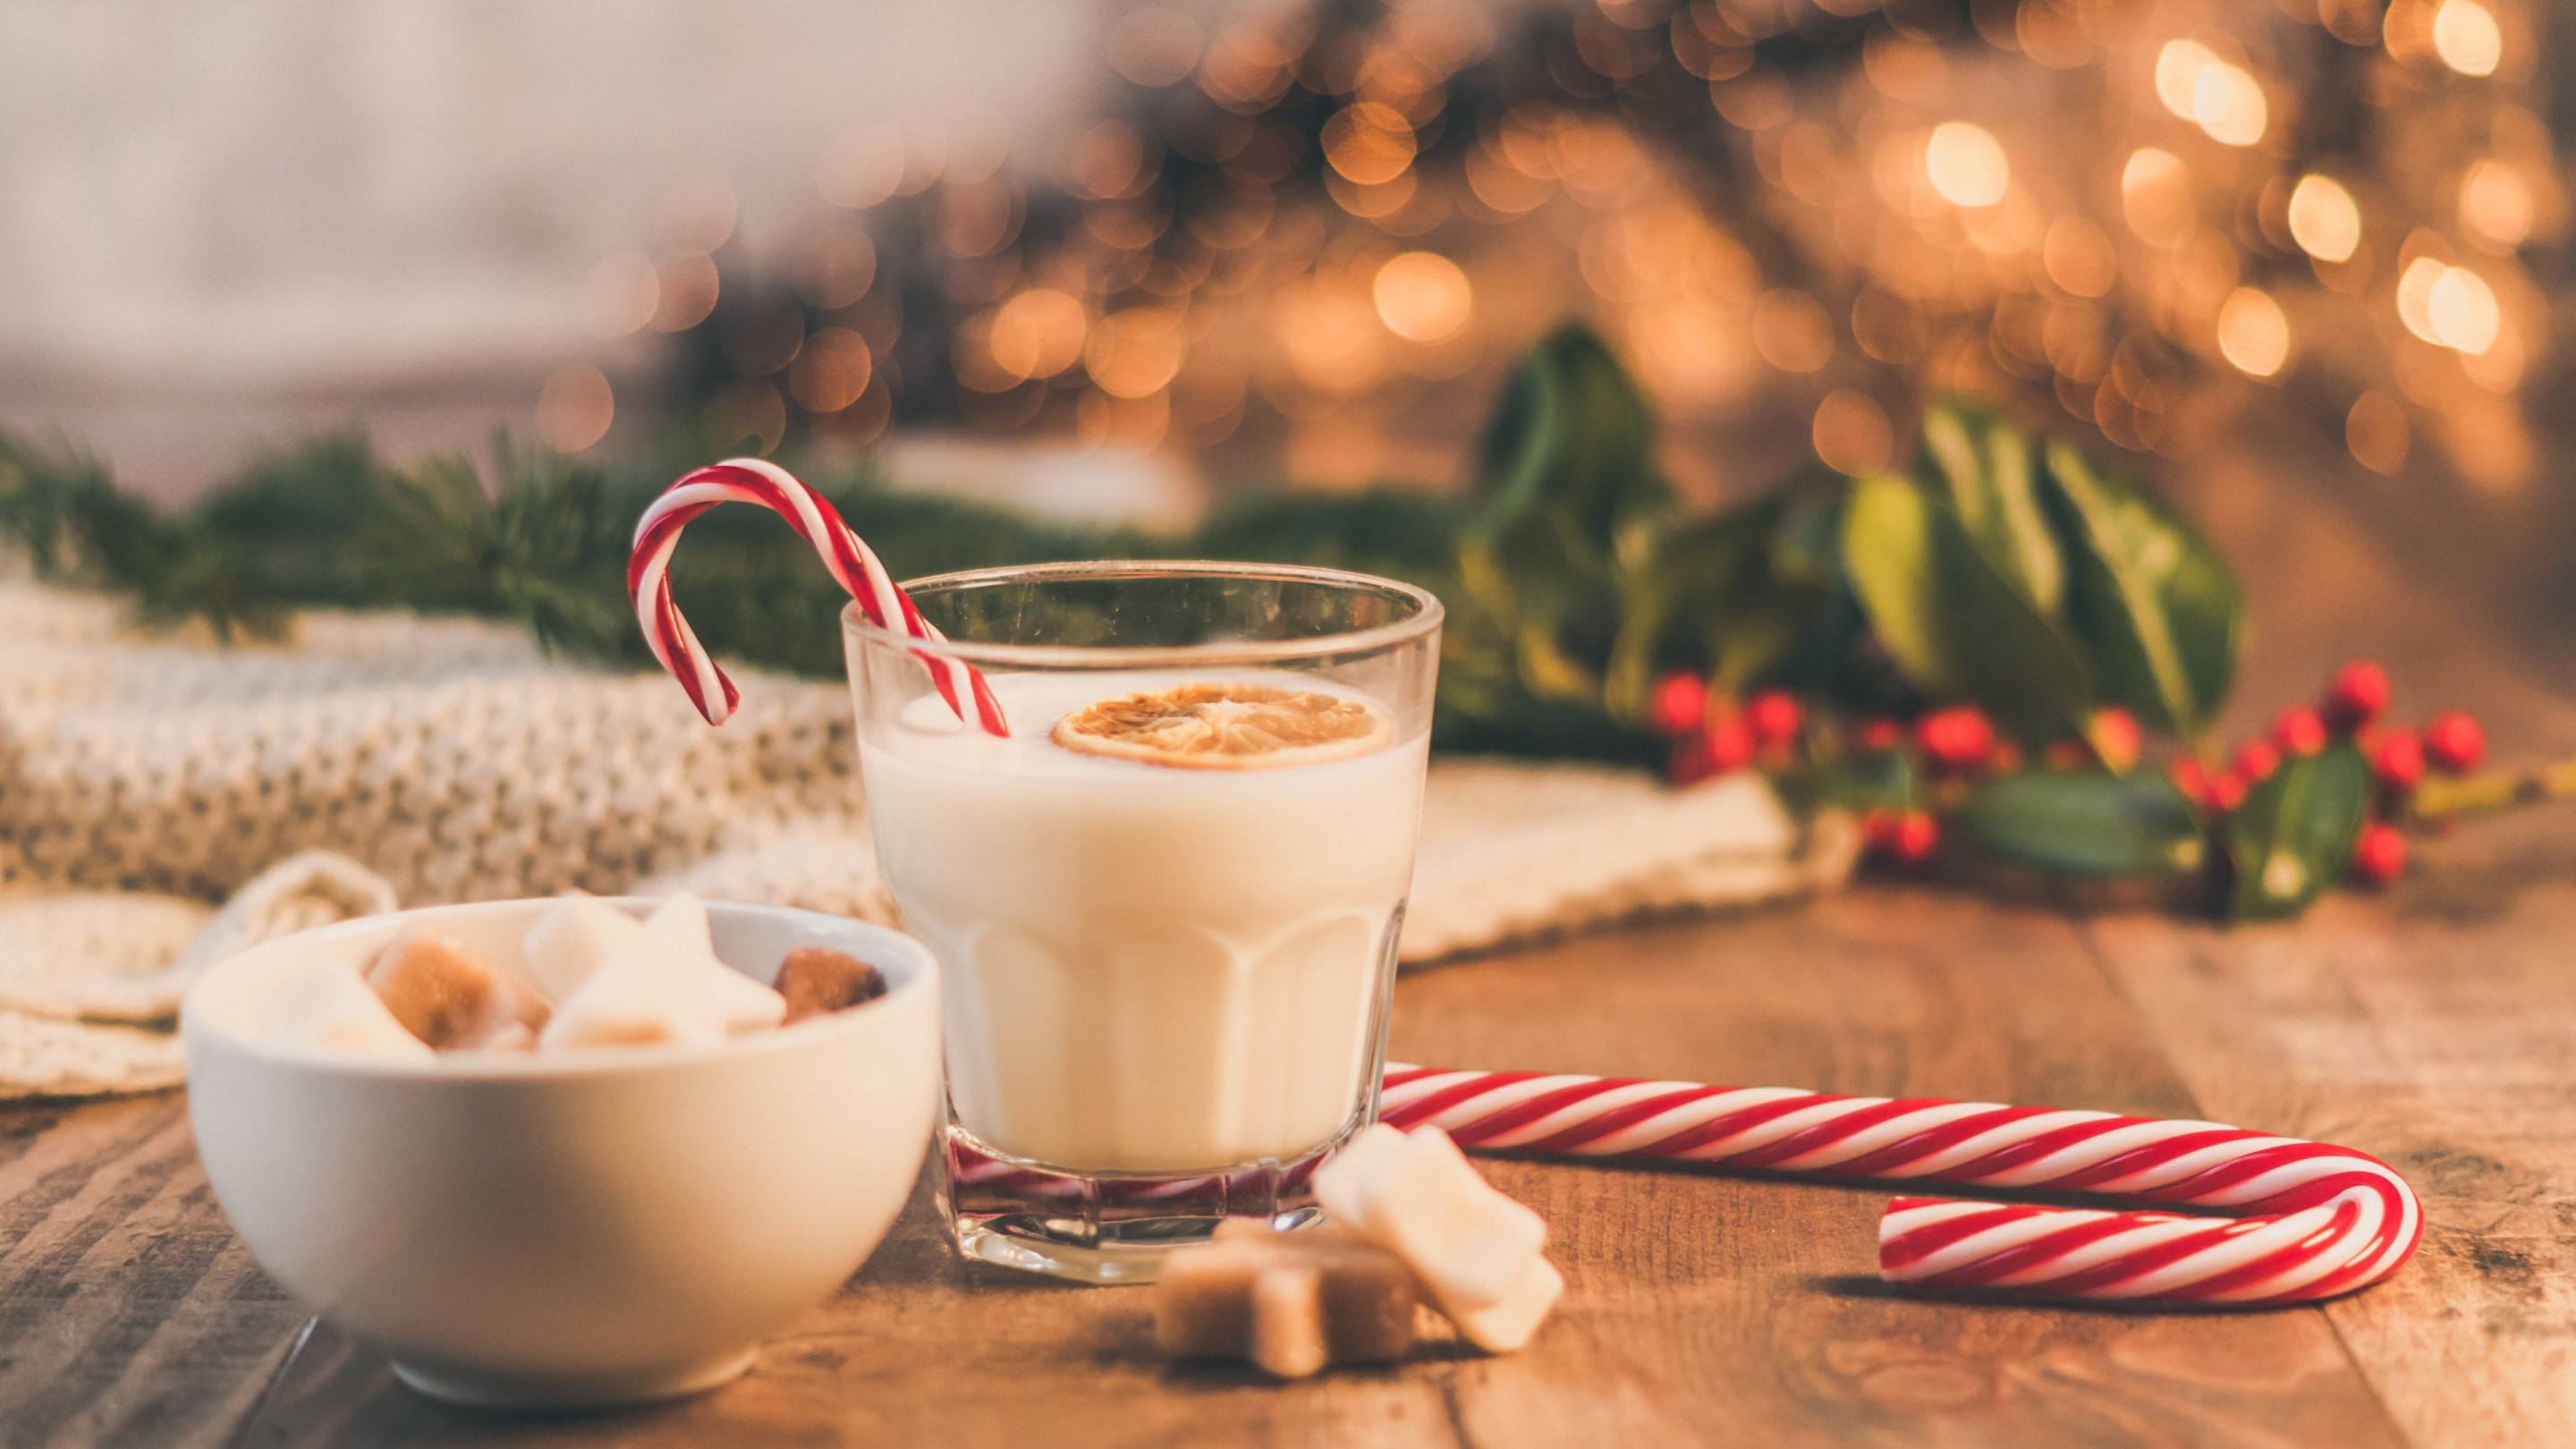 Seasonal Christmas sweets and cup of milk wallpaper 2880x1620